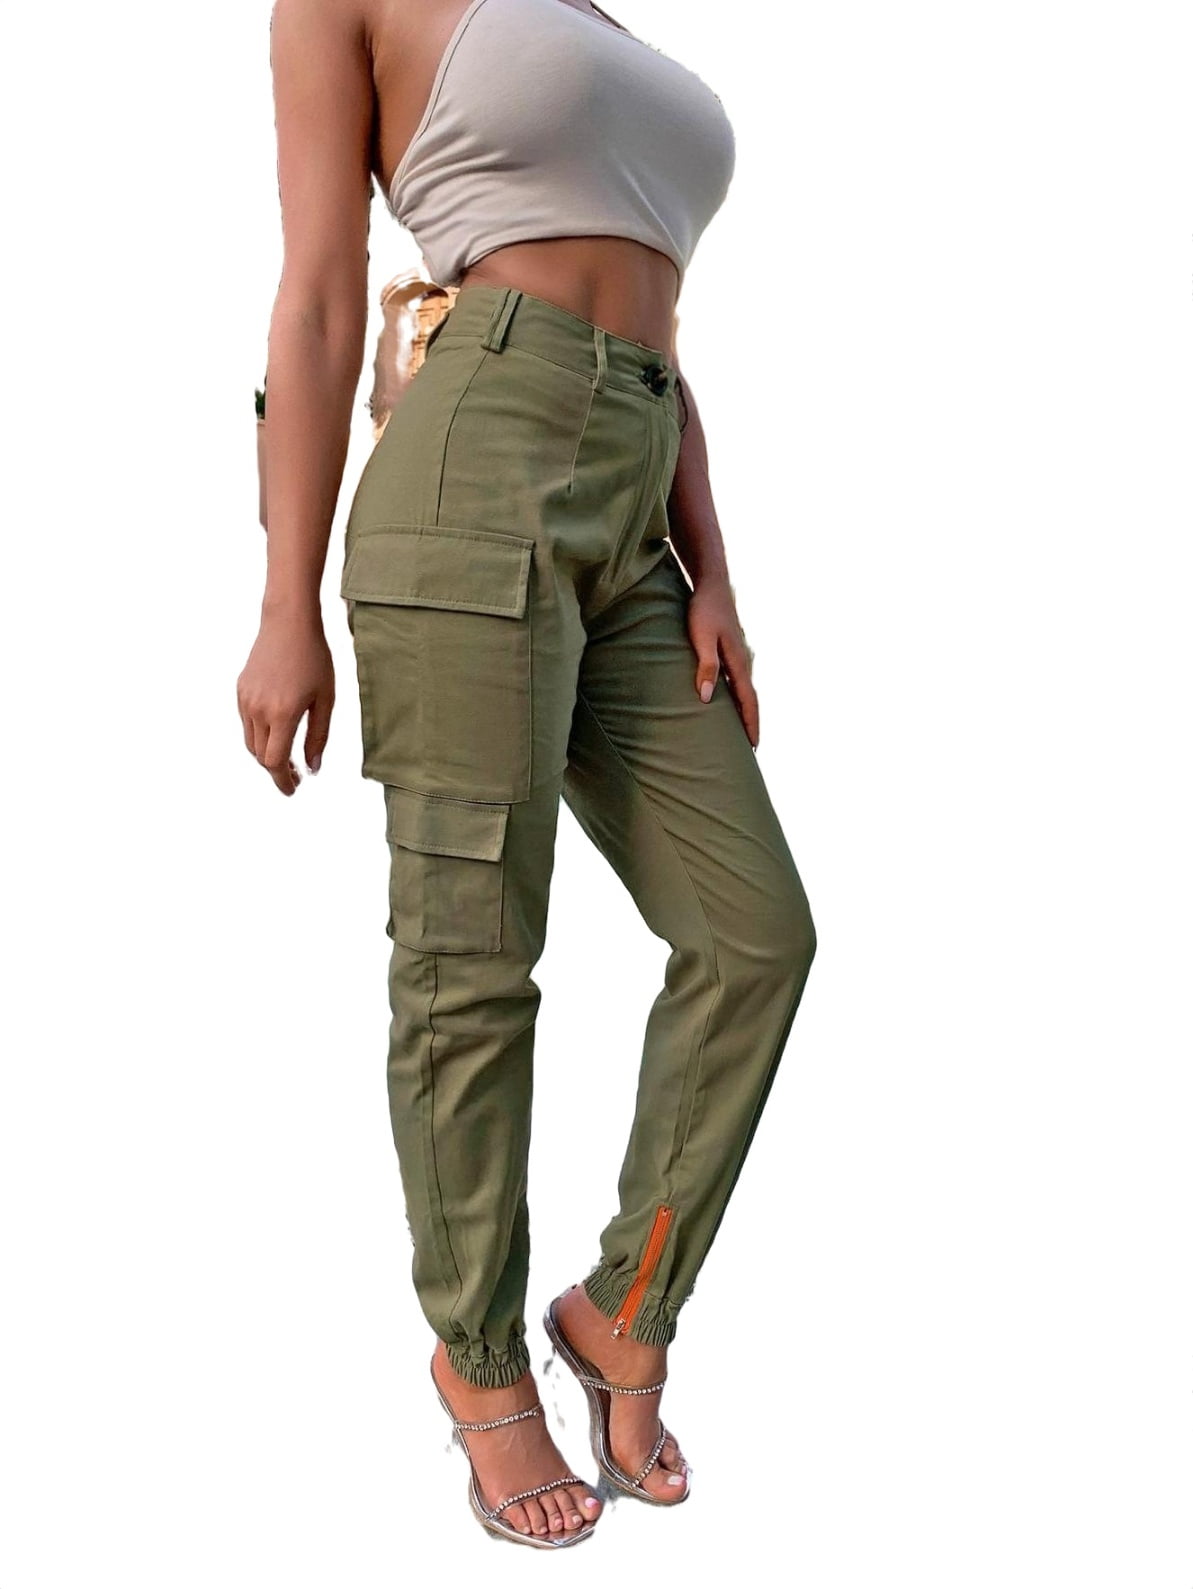 Level You Up Camo Cargo Pant - Olive/combo | Fashion Nova, Pants | Fashion  Nova